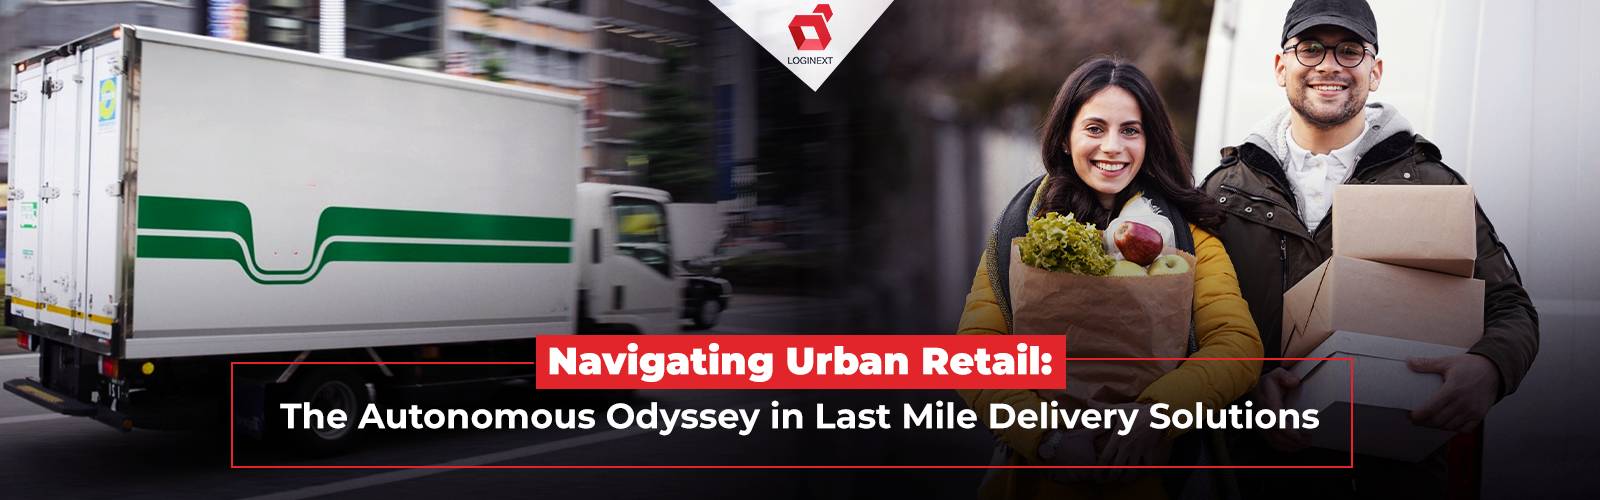 Die autonome Odyssee bei Last-Mile-Delivery-Lösungen